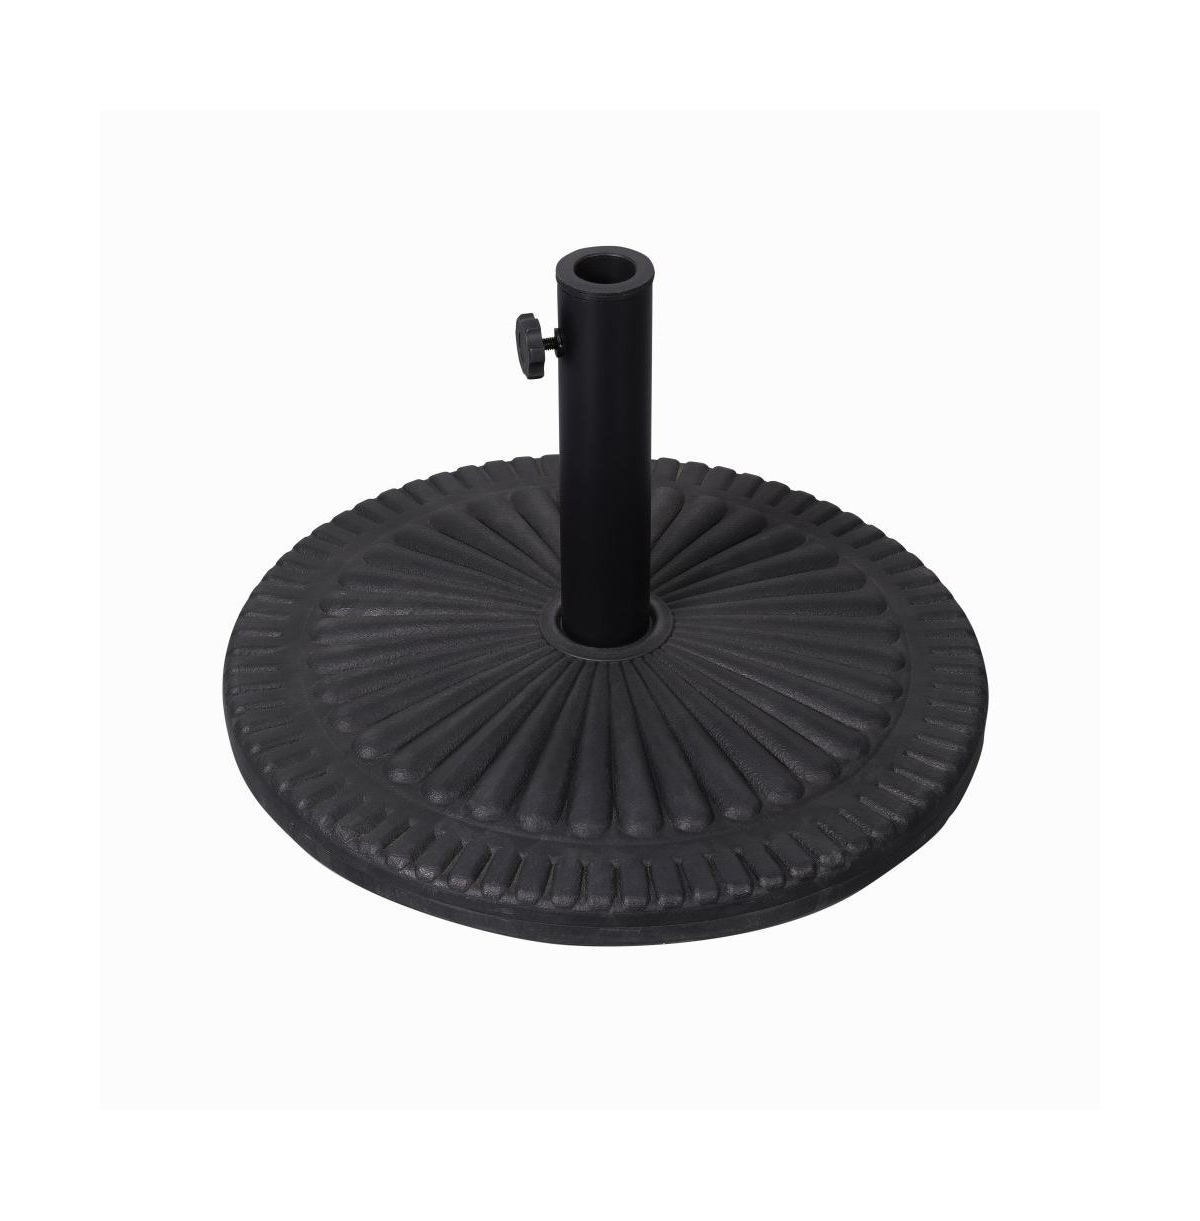 Keegan 19.25" Diameter Universal Sunburst Pattern Cement Patio Umbrella Base With Weatherproof Plastic Polymer Coating - Black